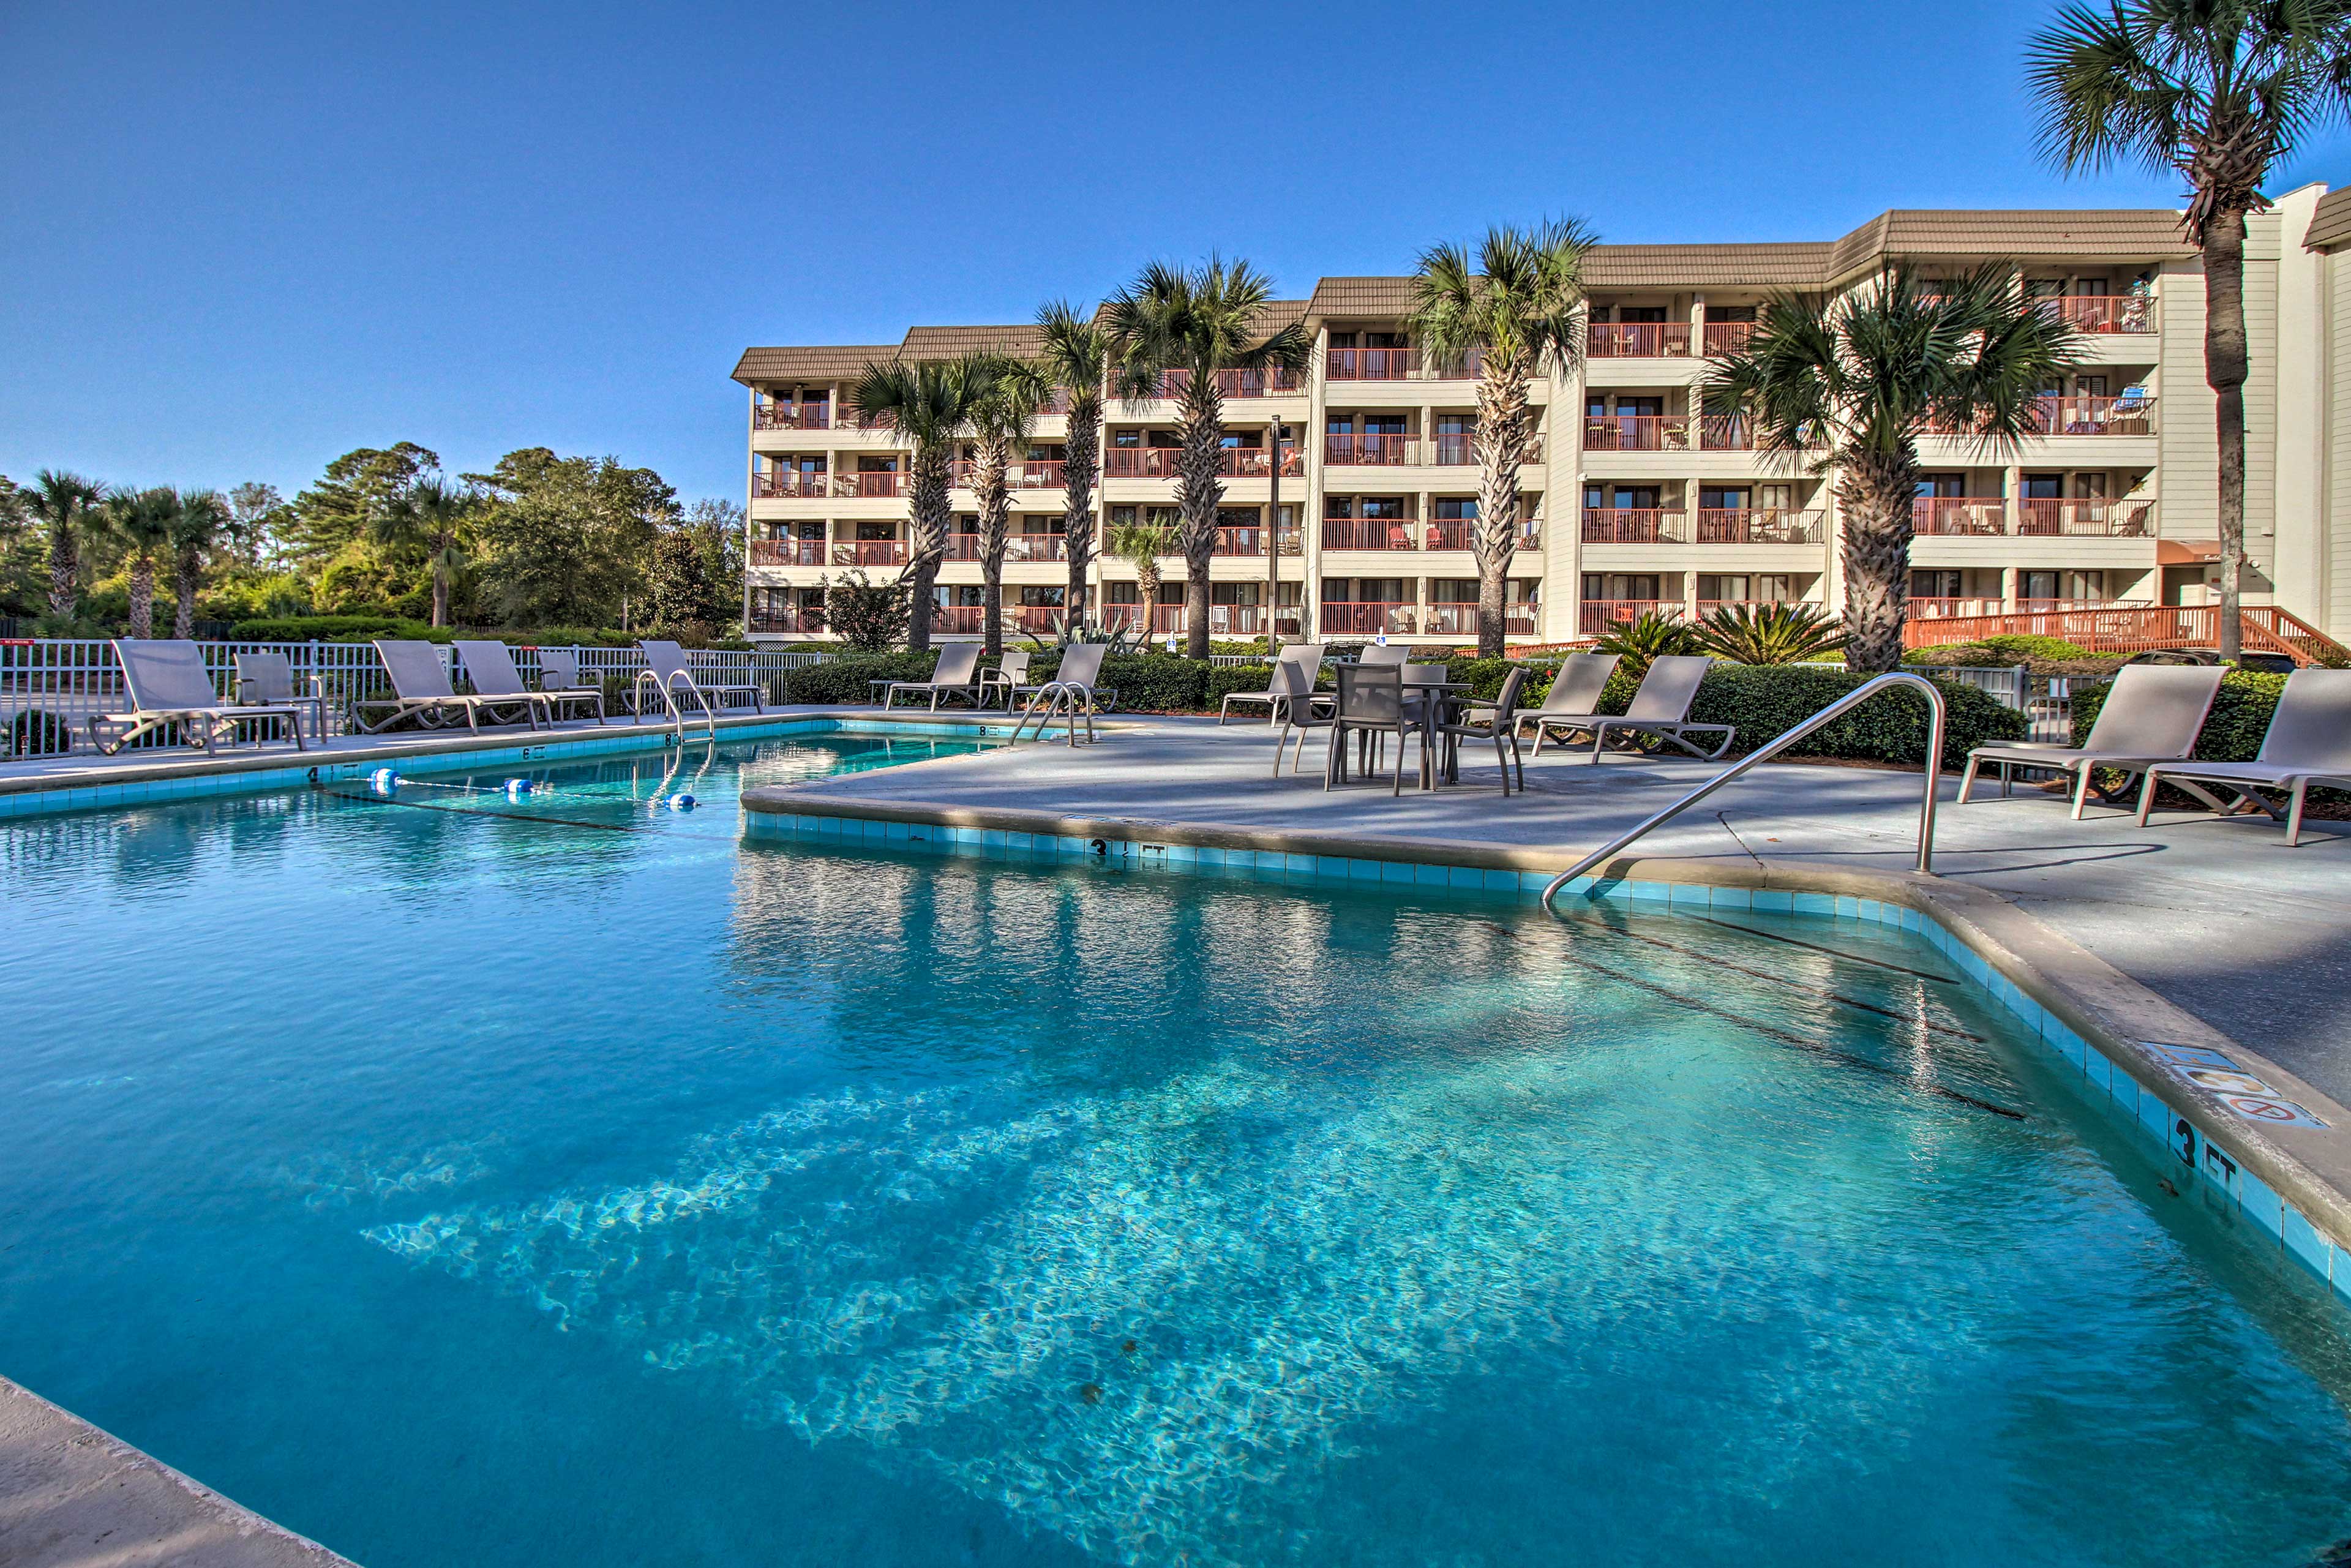 Hilton Head Island Vacation Rental | 1BR | 1BA | 540 Sq Ft | Steps to Enter